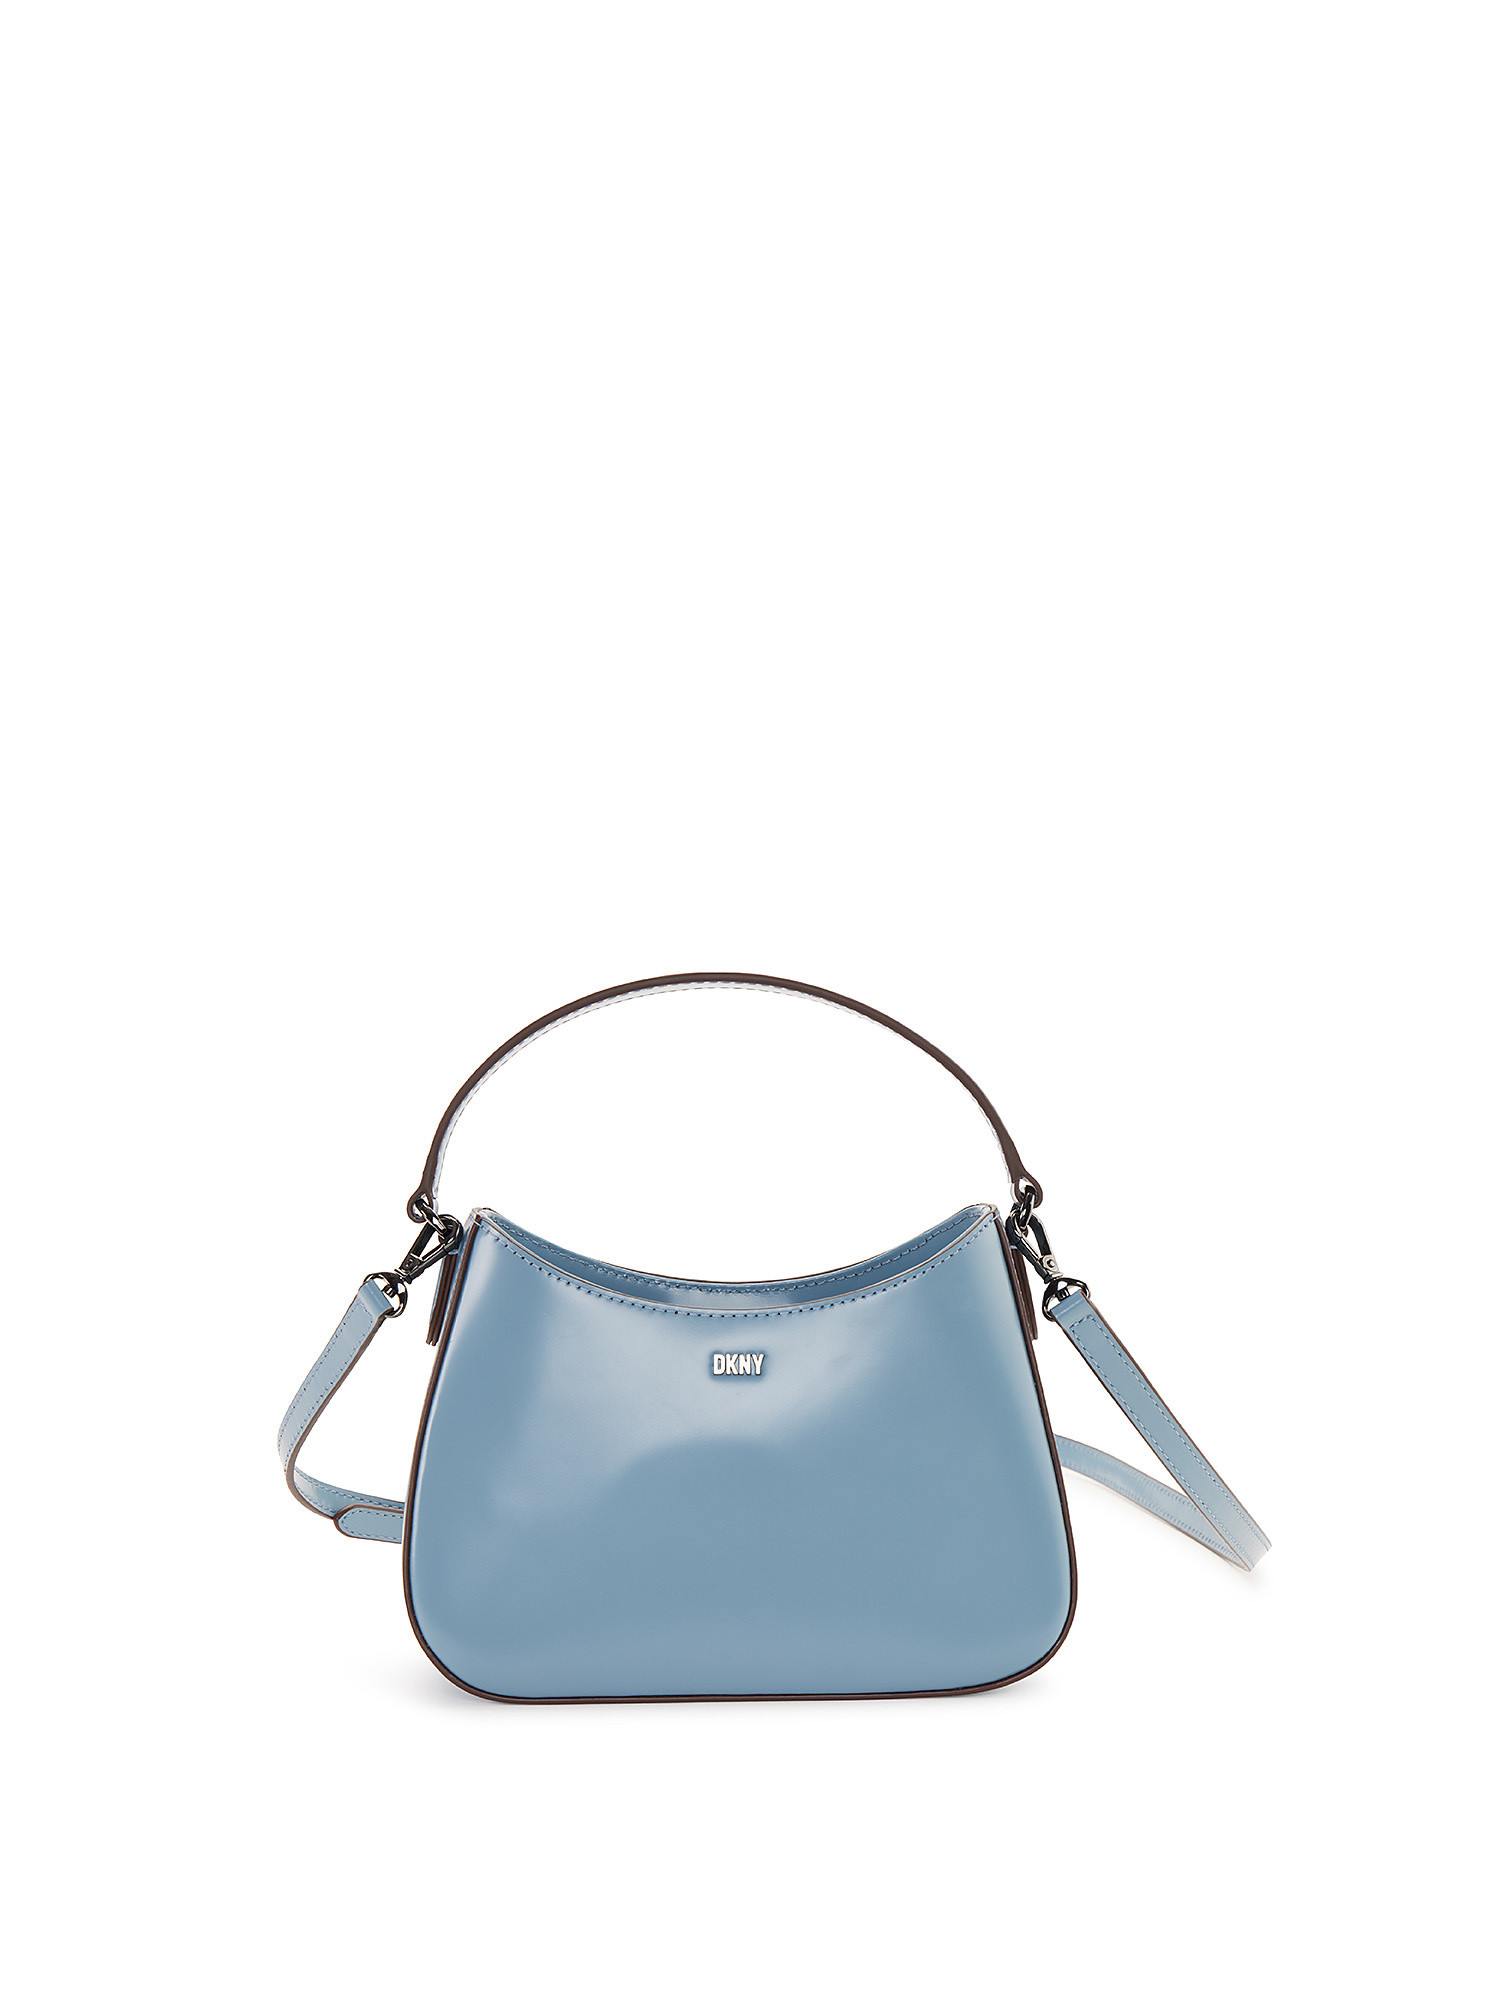 Dkny - Ellie bag with removable tarcolla, Light Blue, large image number 0